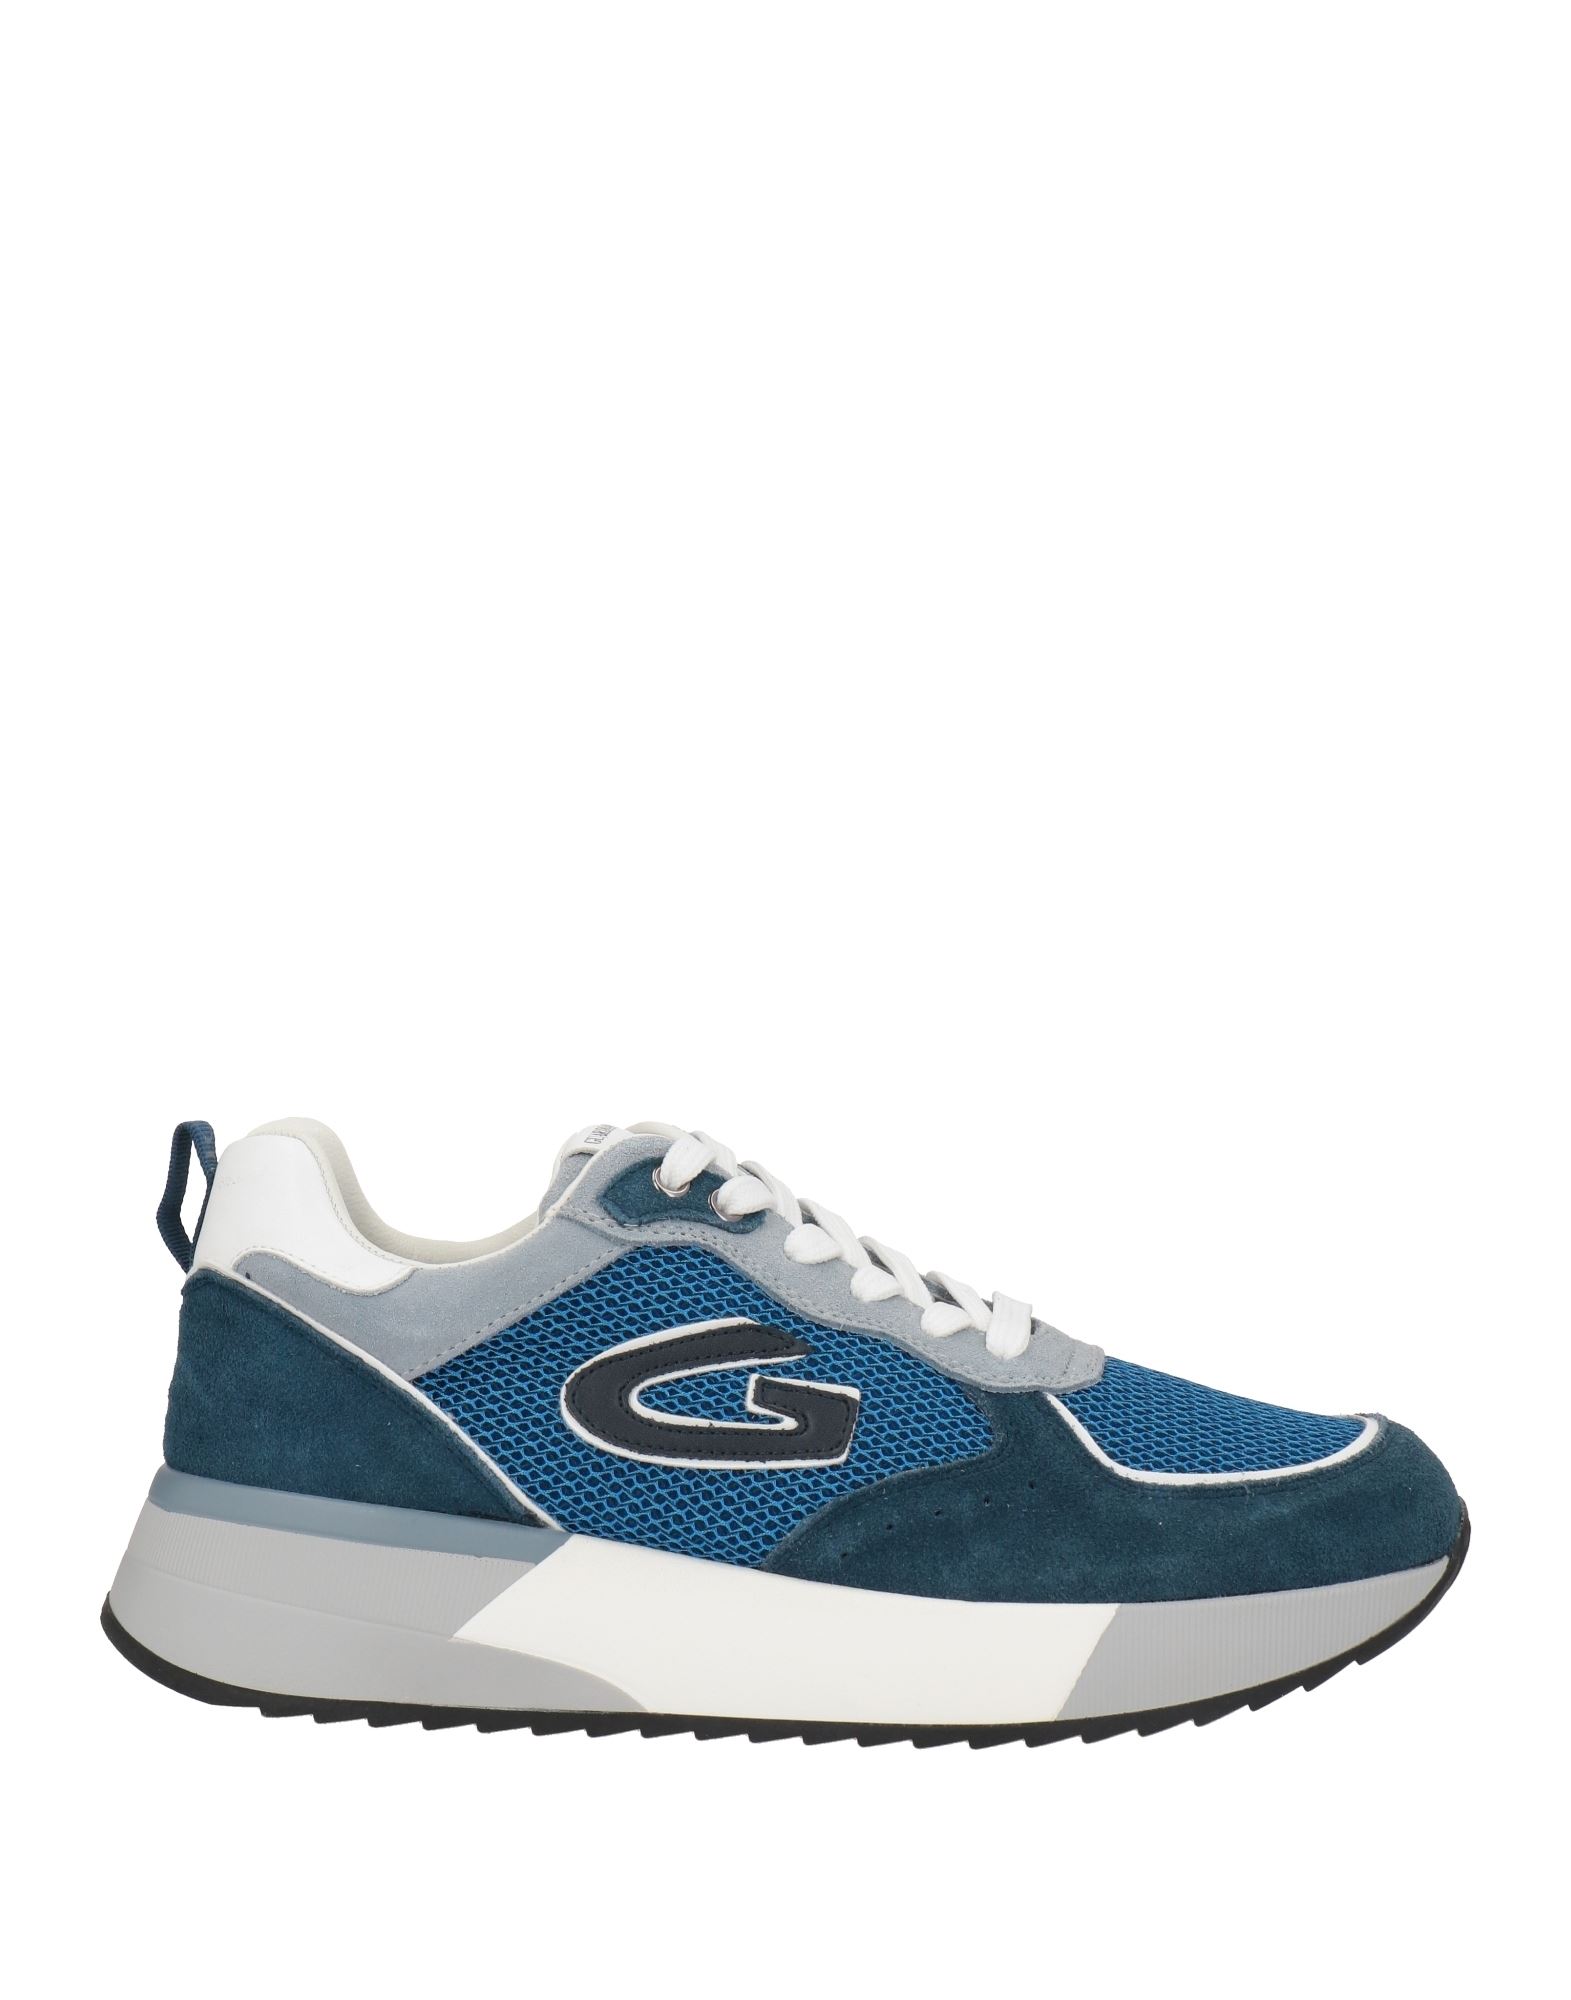 Alberto Guardiani Sneakers In Navy Blue